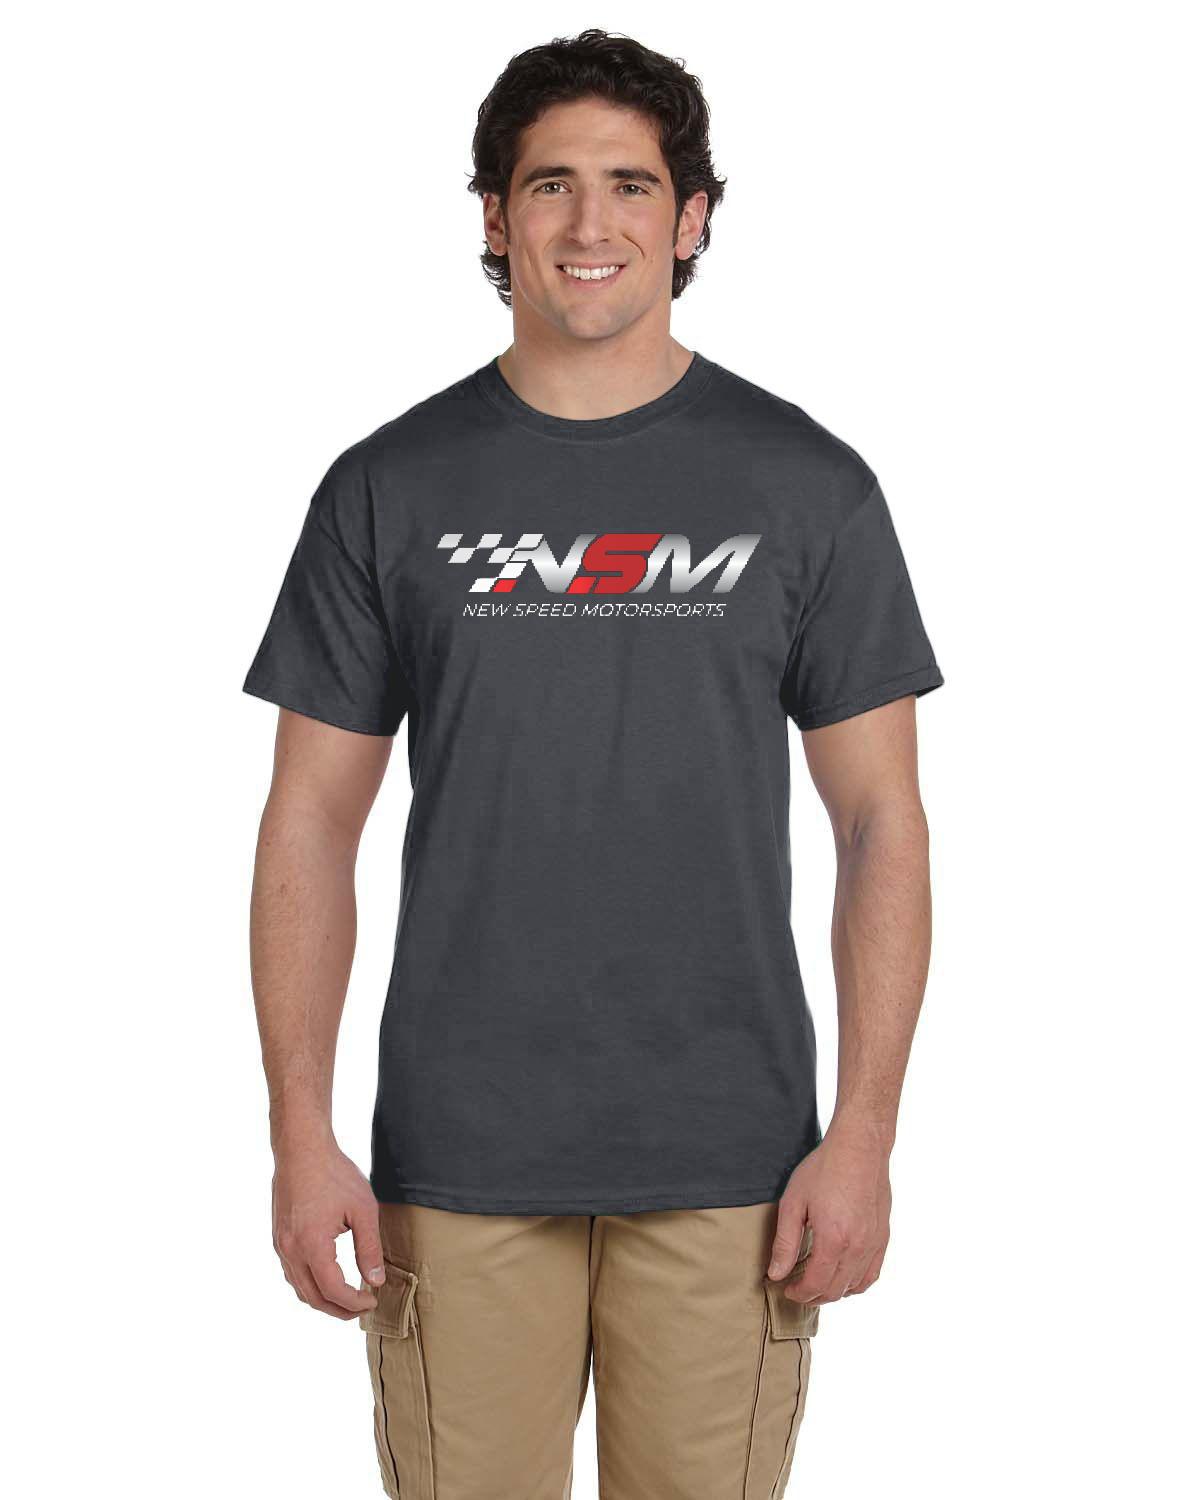 New Speed Motorsports Men's T-Shirt (S-XL)